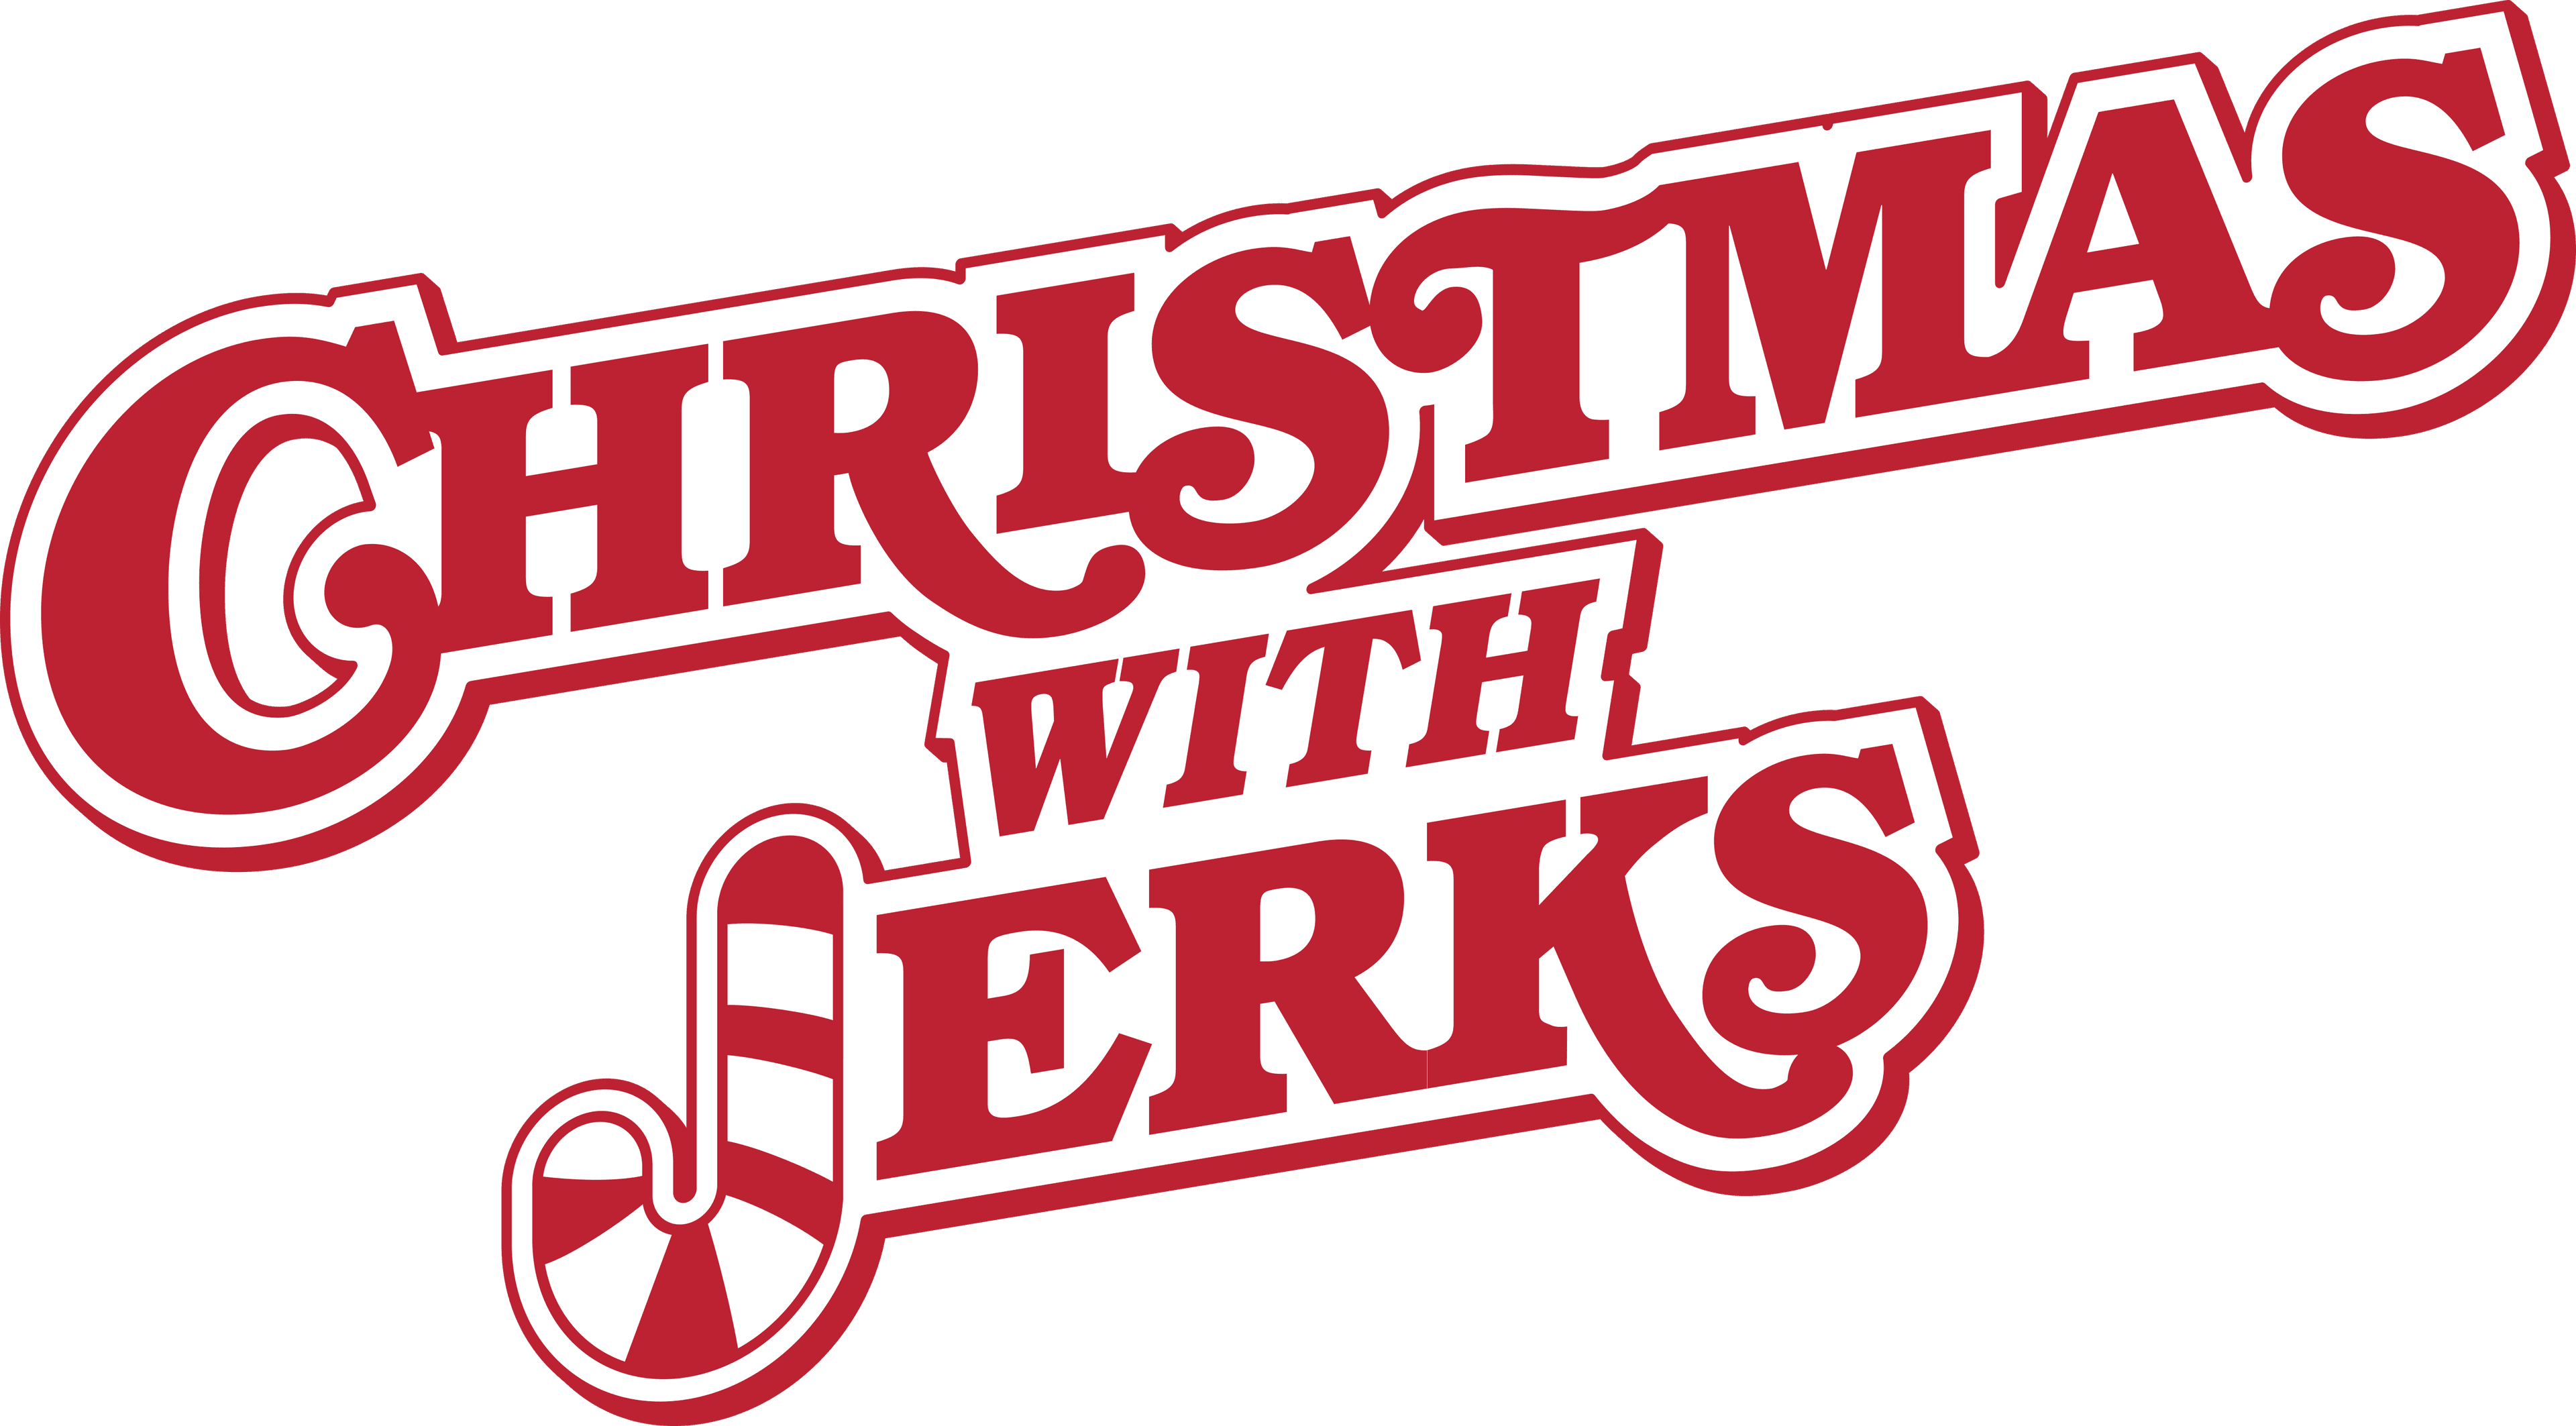 Christmas with Jerks logo